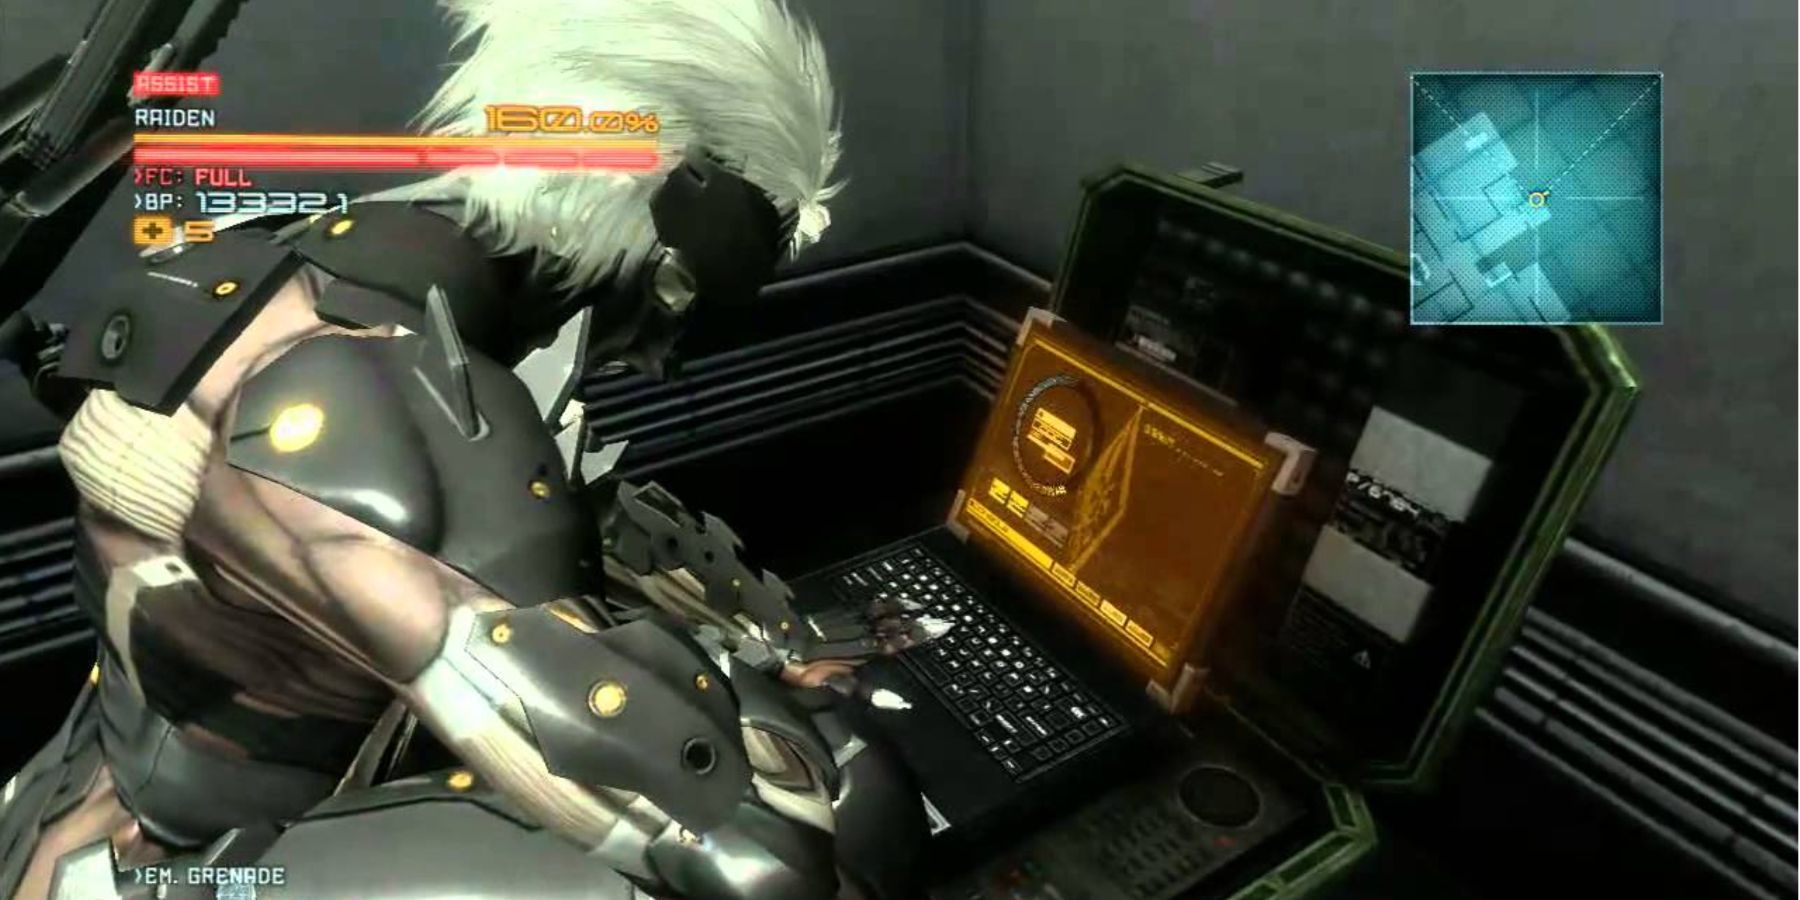 Raiden using a laptop.